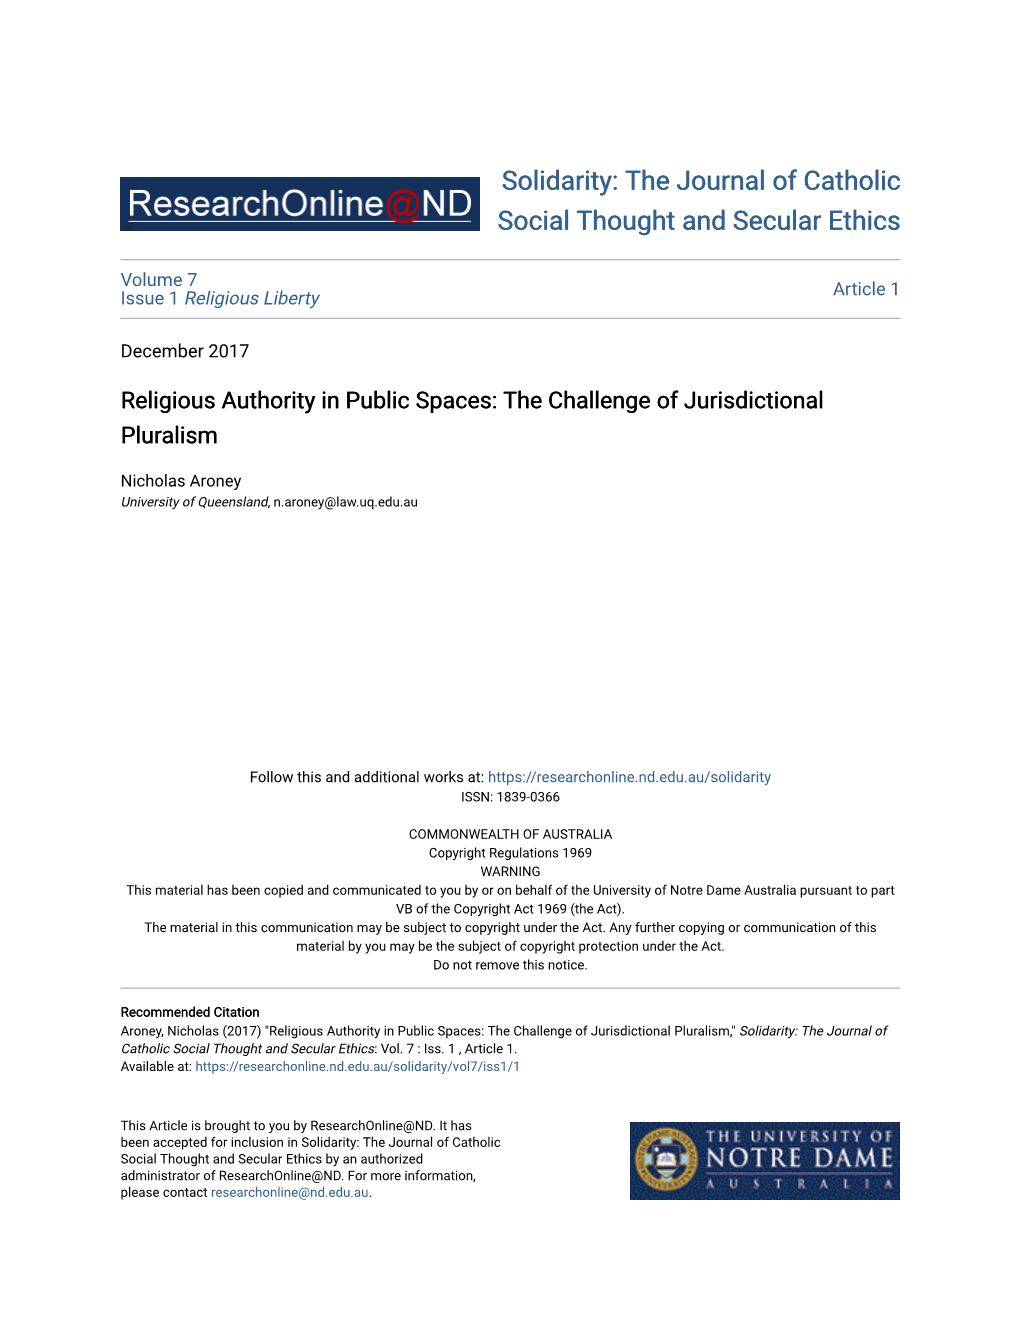 Religious Authority in Public Spaces: the Challenge of Jurisdictional Pluralism